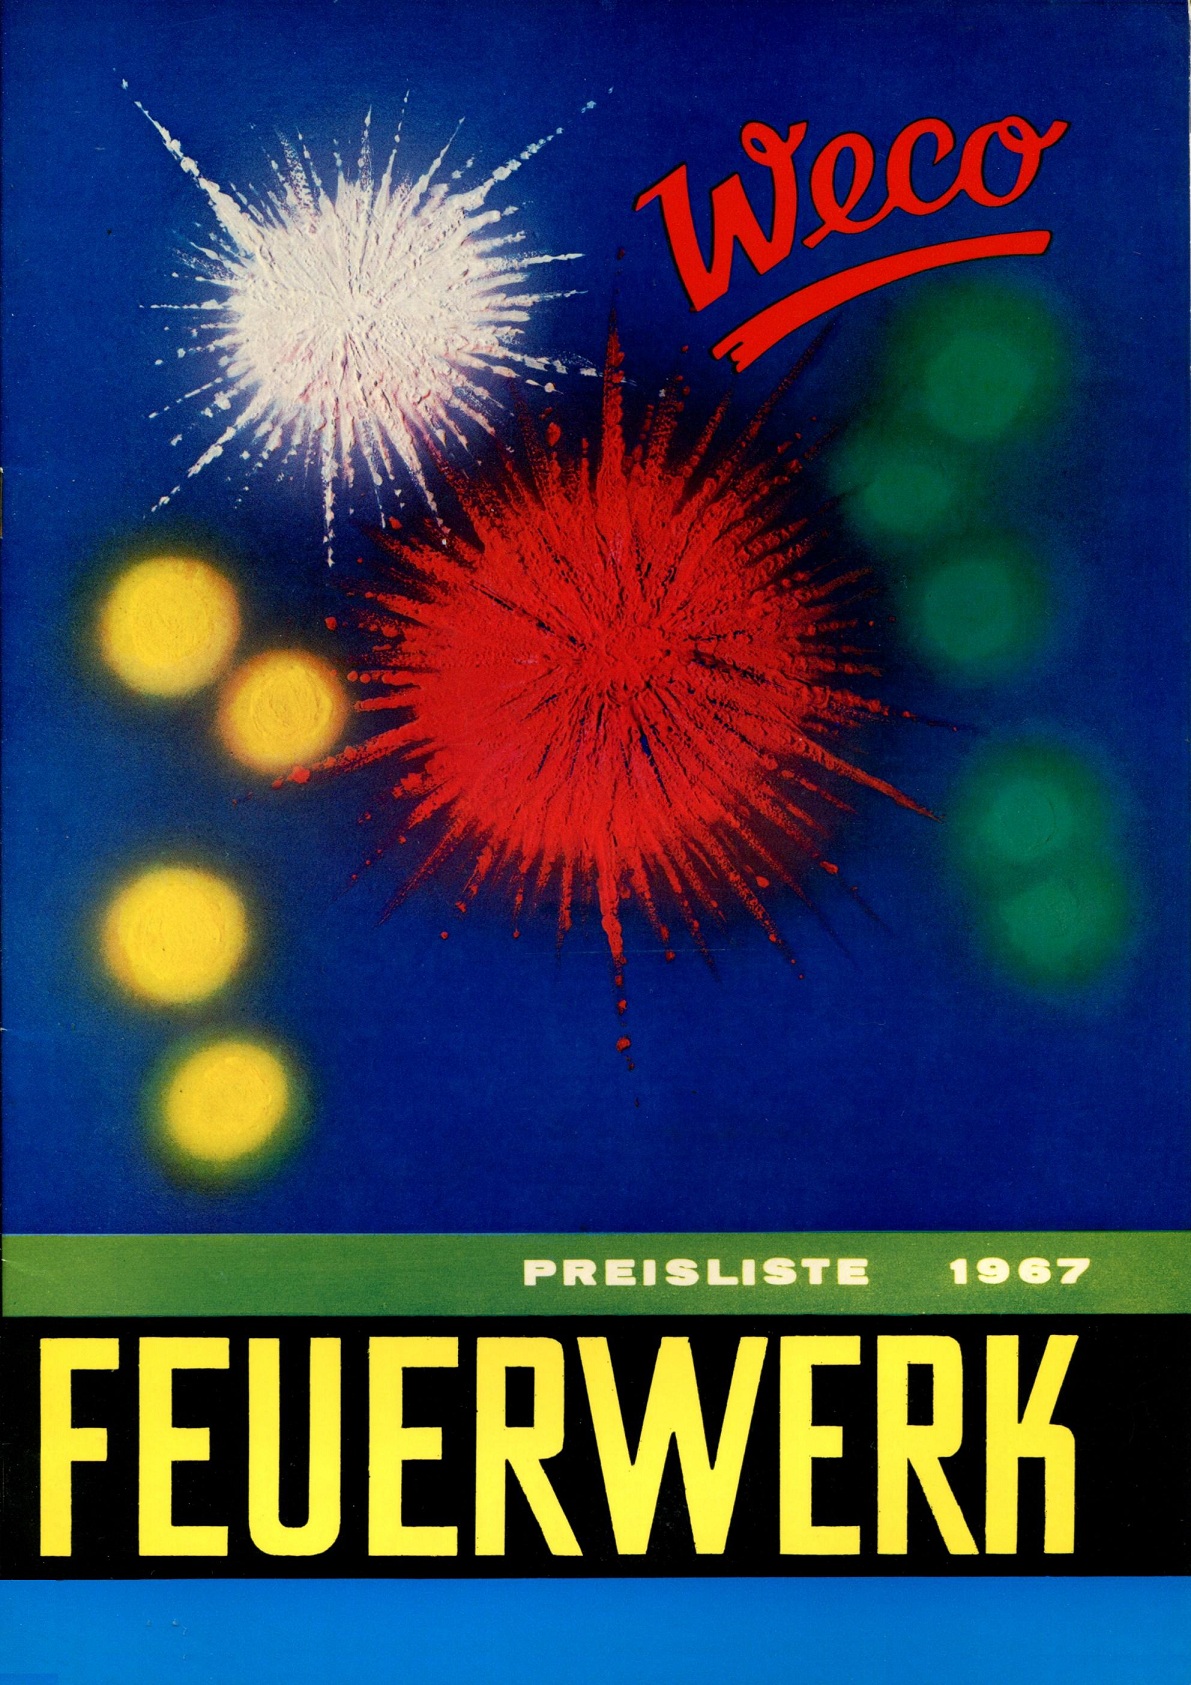 Weco Katalog 1967

(Danke an oudennieuwarchief.nl)